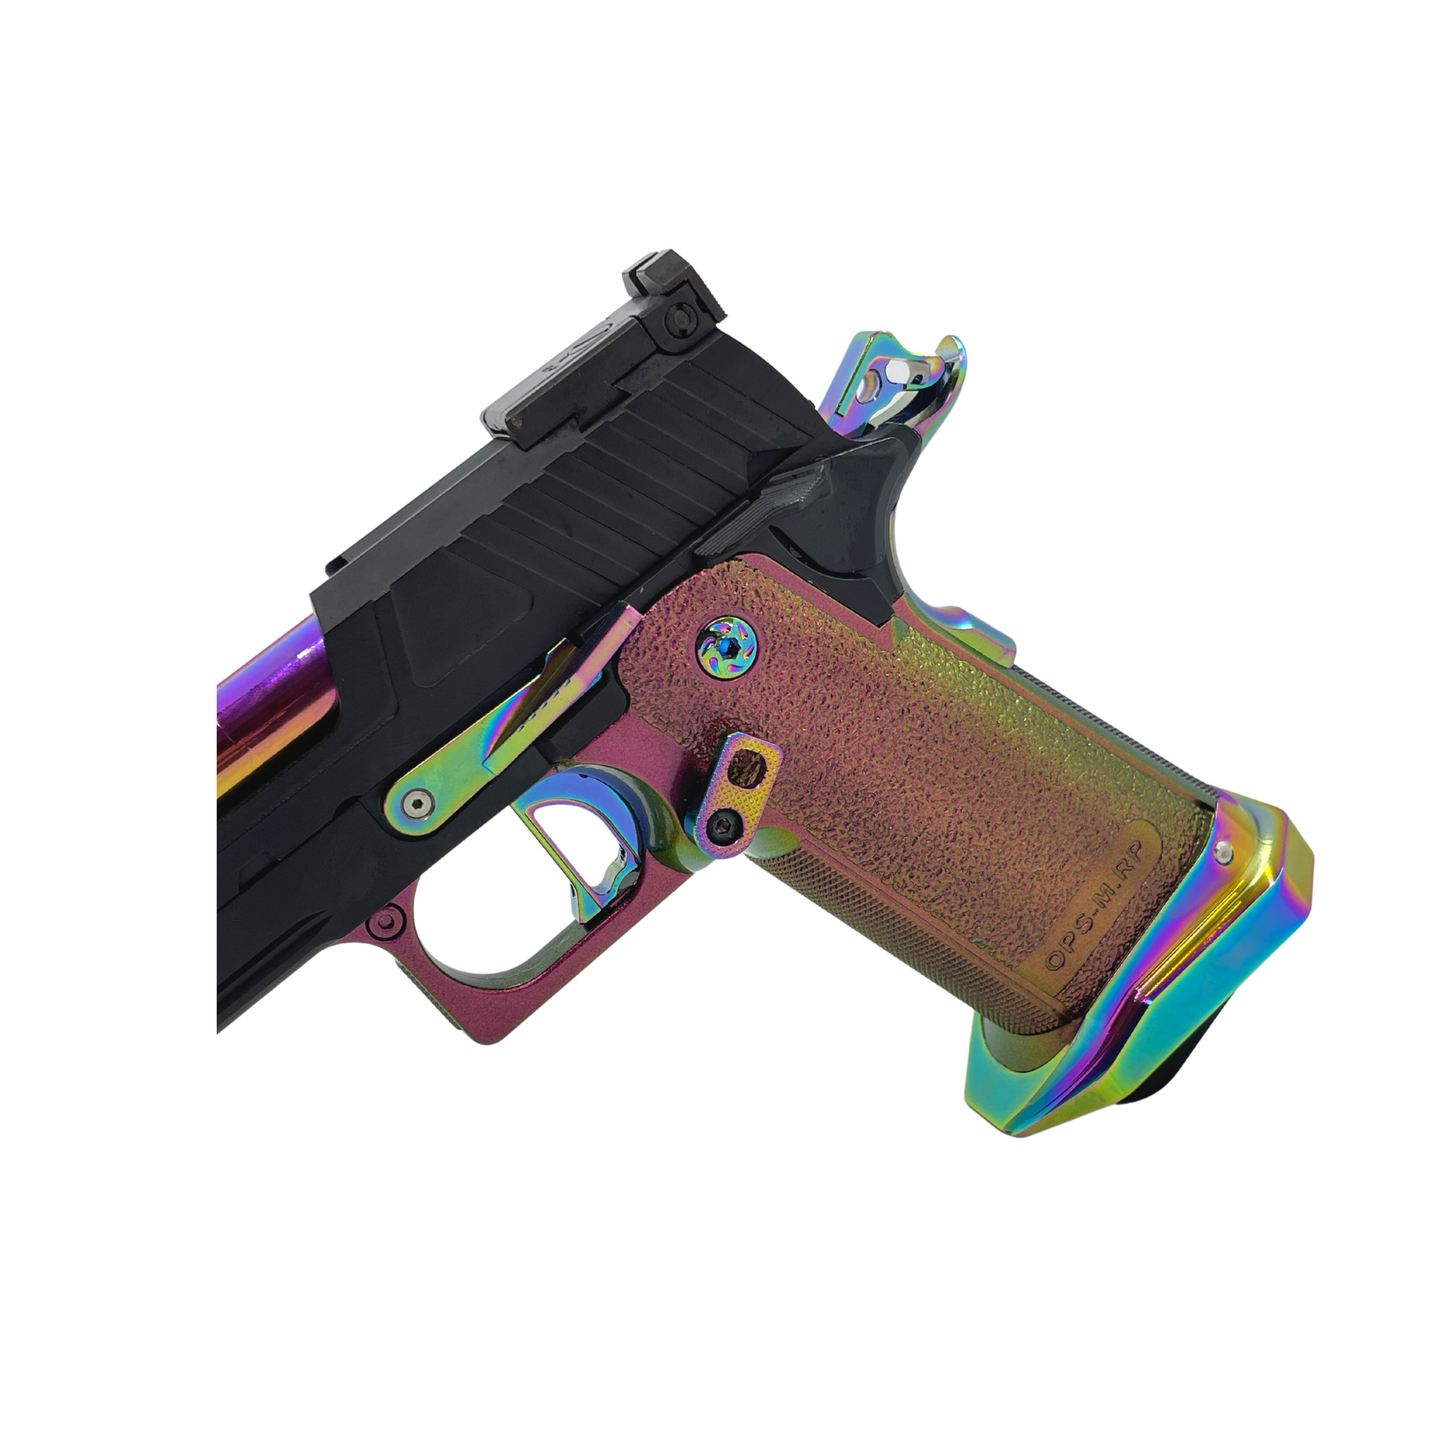 "Skyrim" Custom GBU 5.1 Comp Hi-Capa Pistol - Gel Blaster